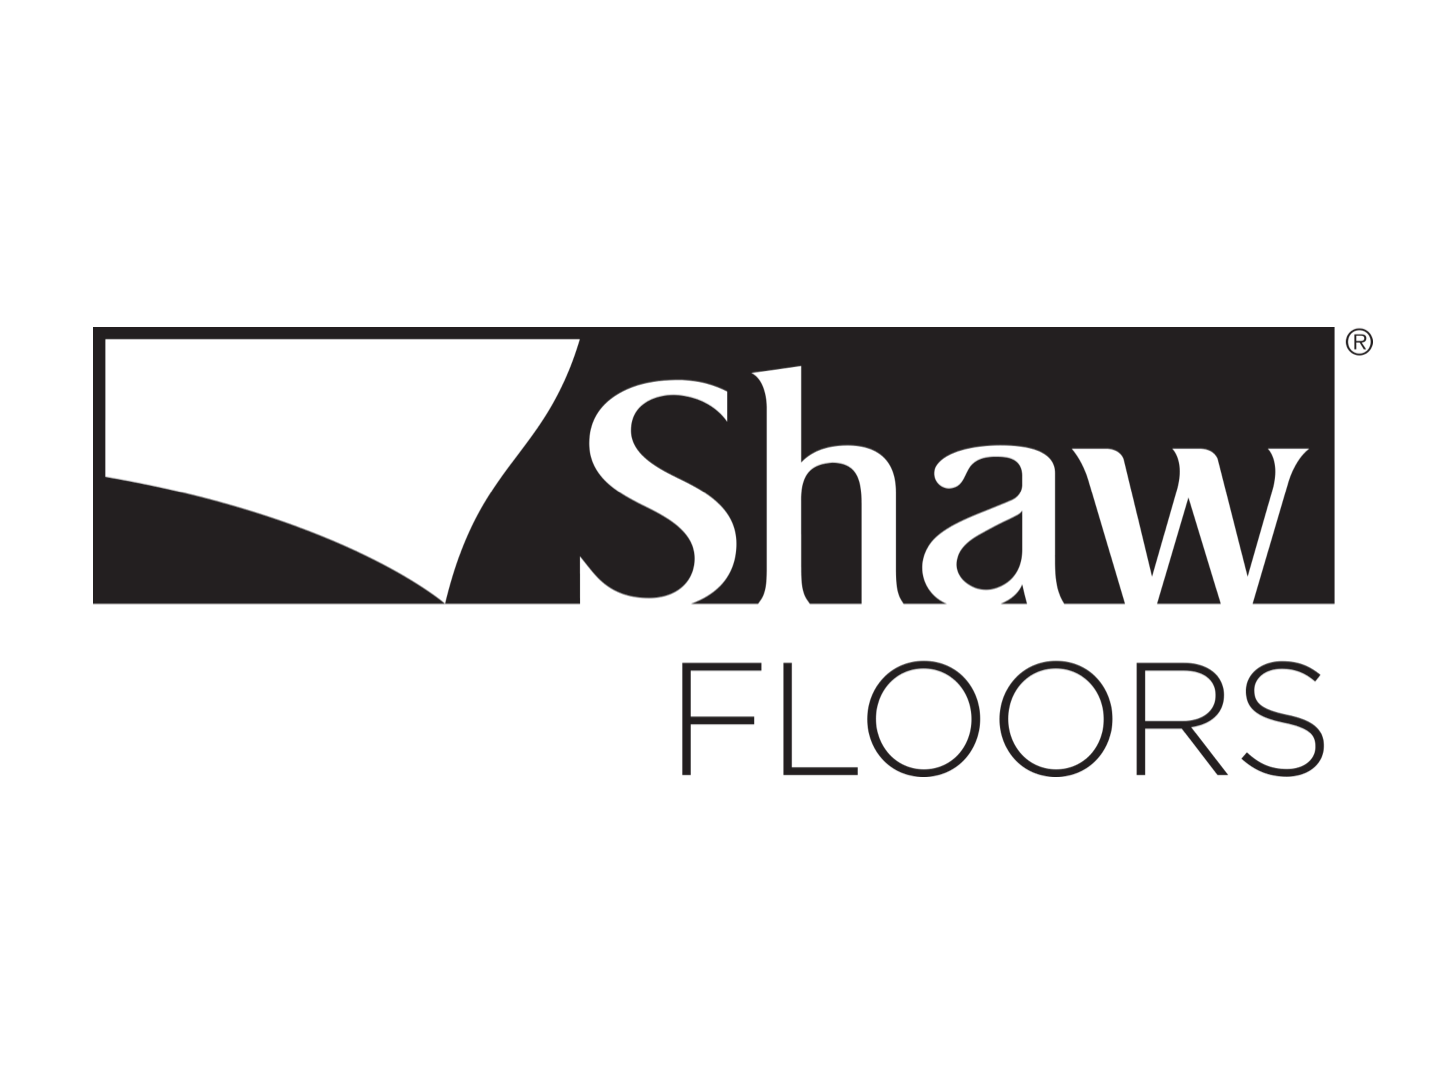 Shaw Floors 2019.png